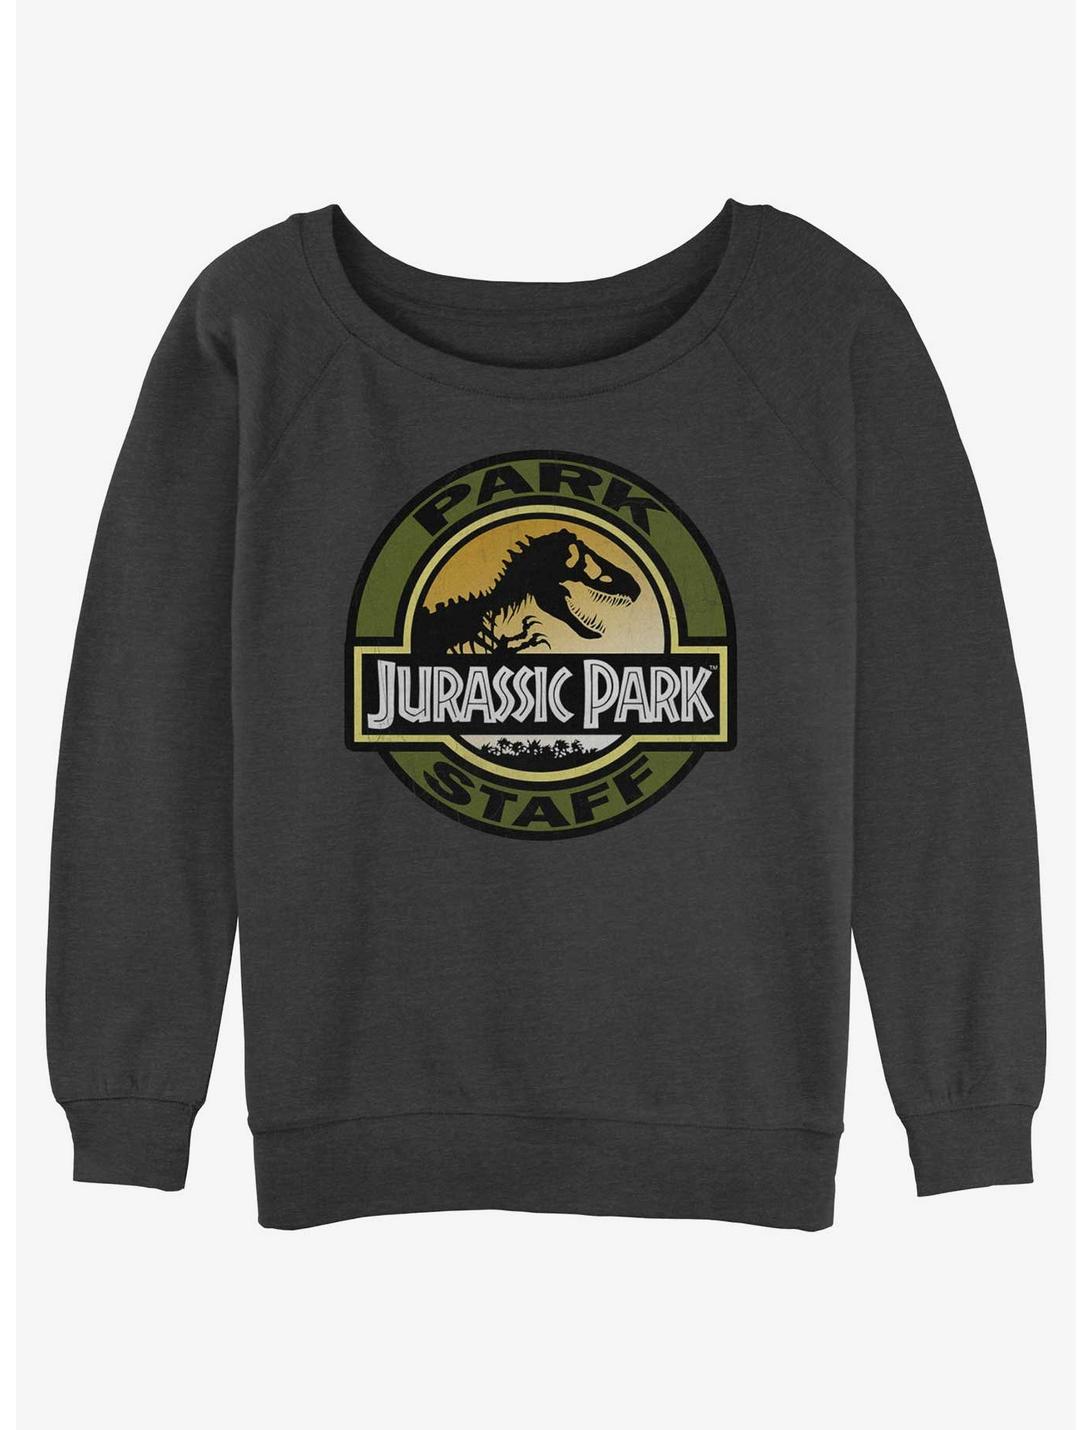 Jurassic Park Staff Girls Slouchy Sweatshirt, CHAR HTR, hi-res